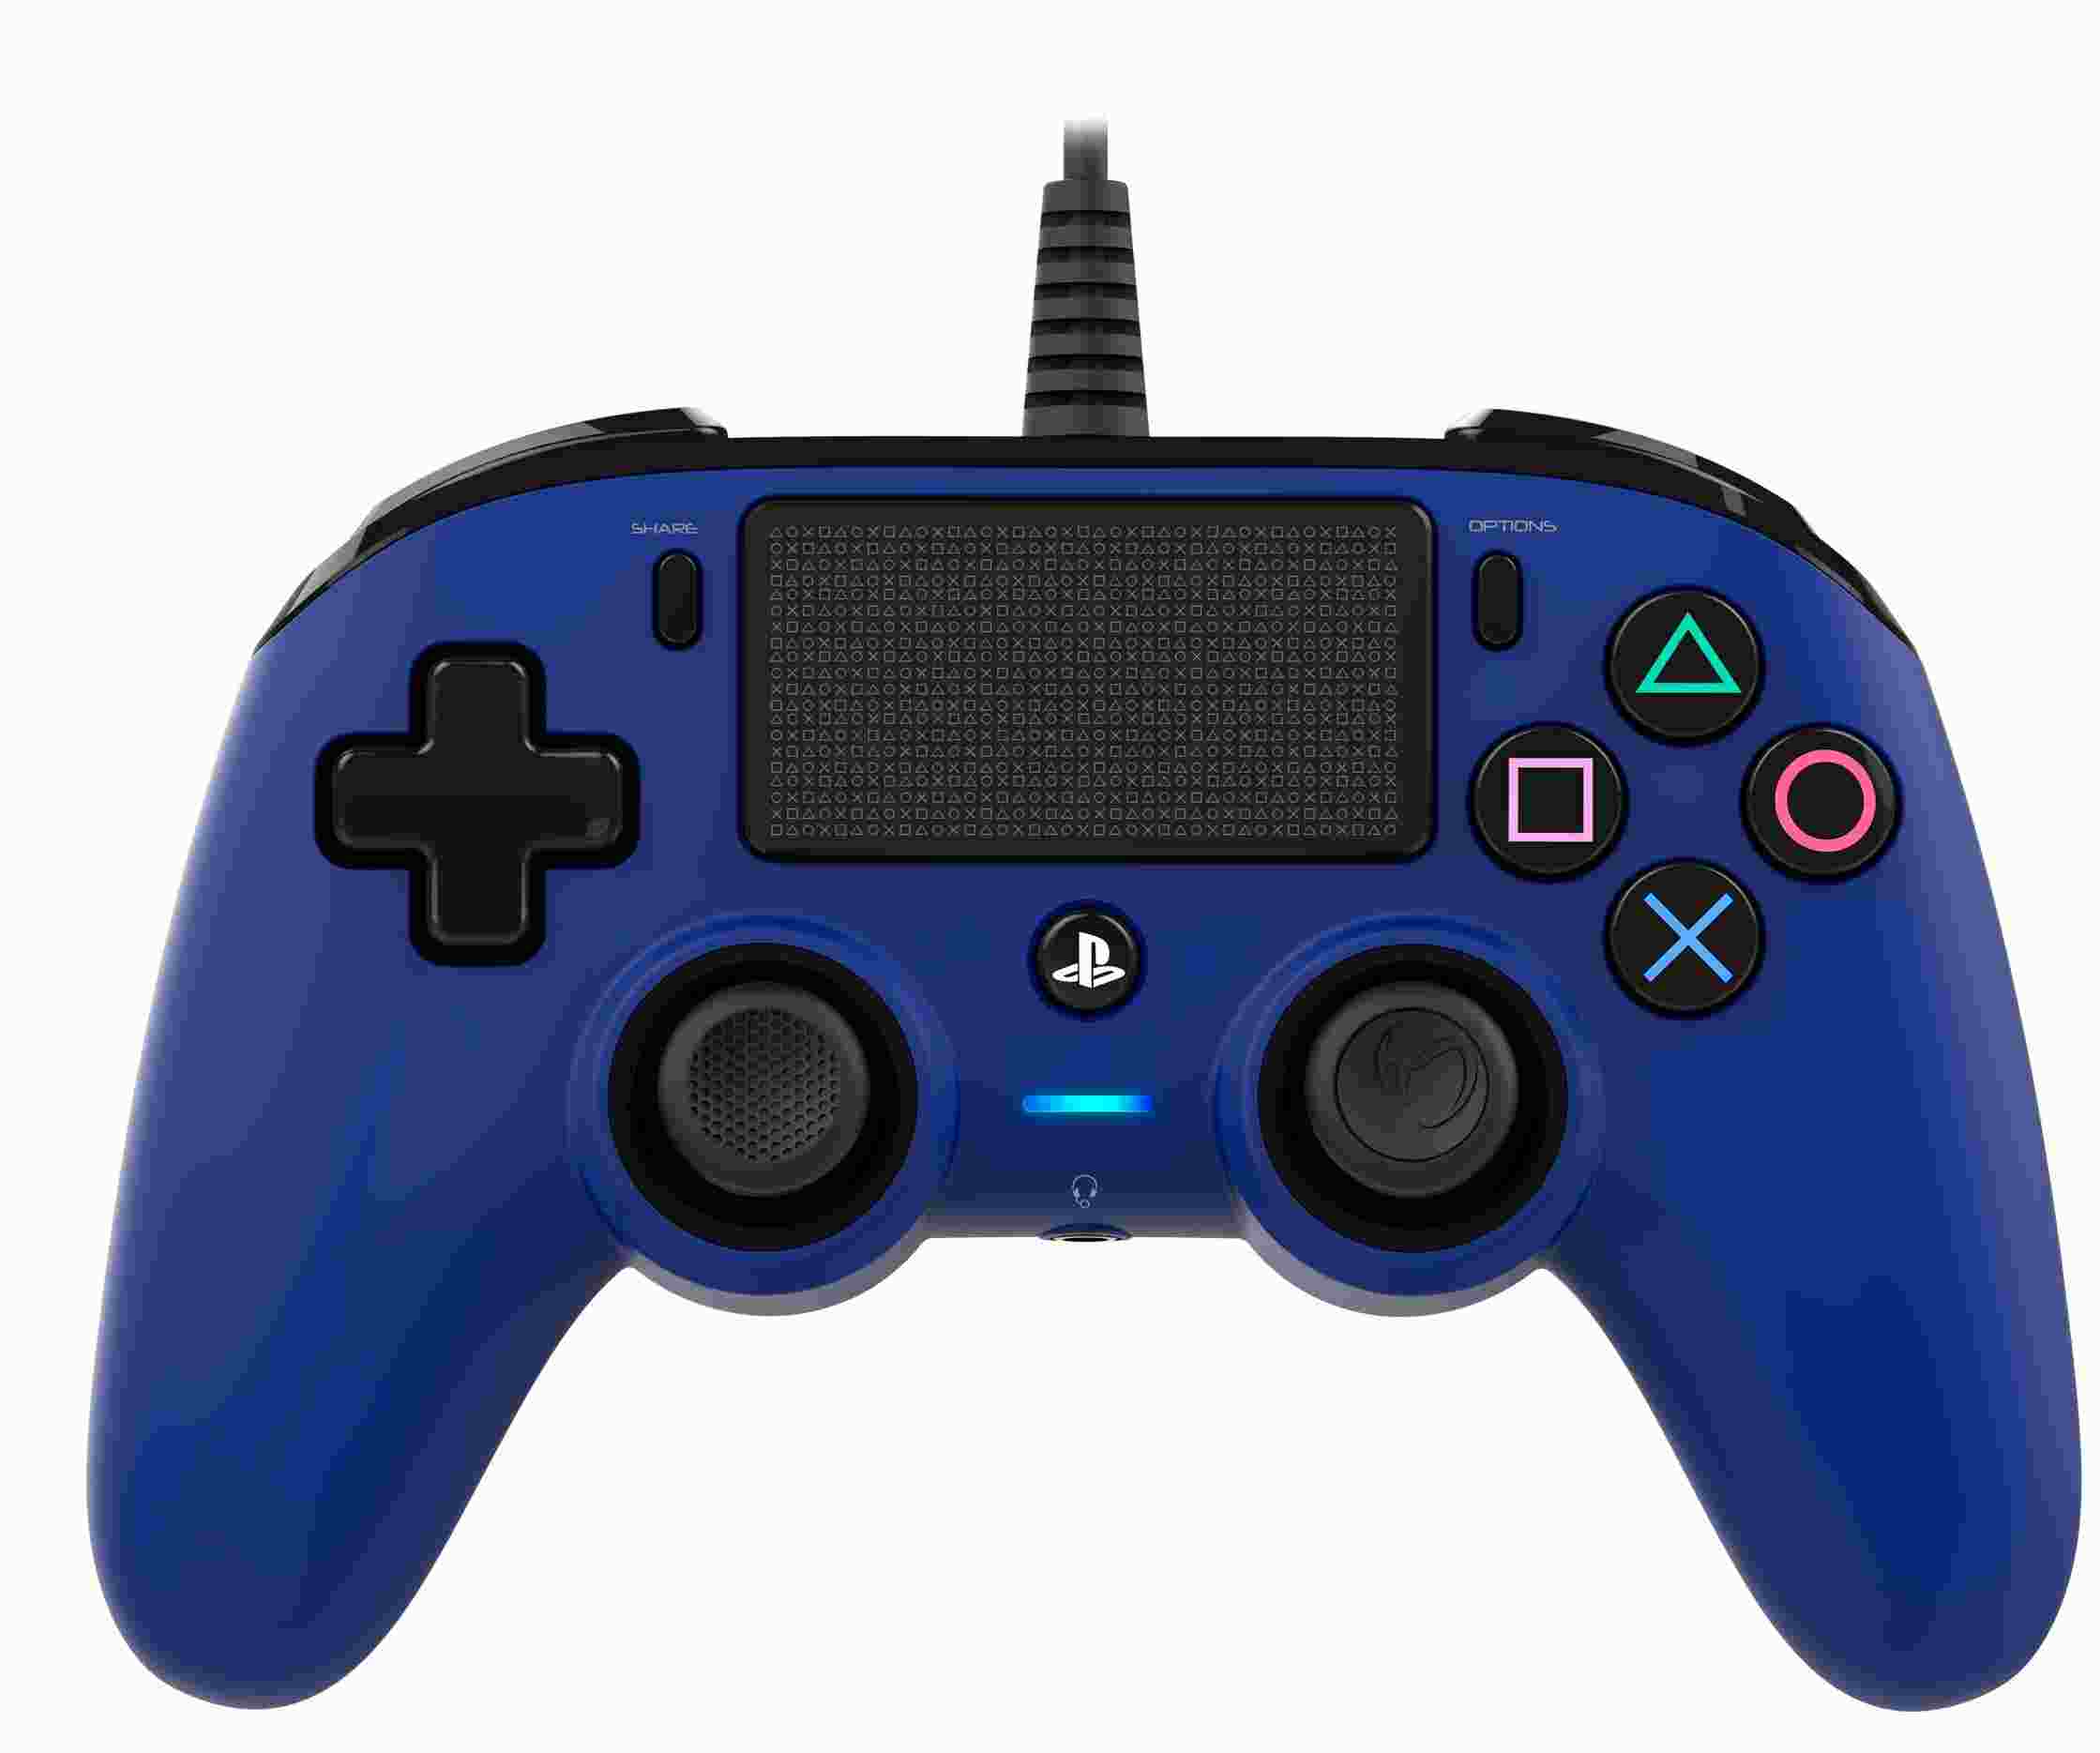 Nacon Wired Compact Controller - ovladač pro PlayStation 4 - modrý1 